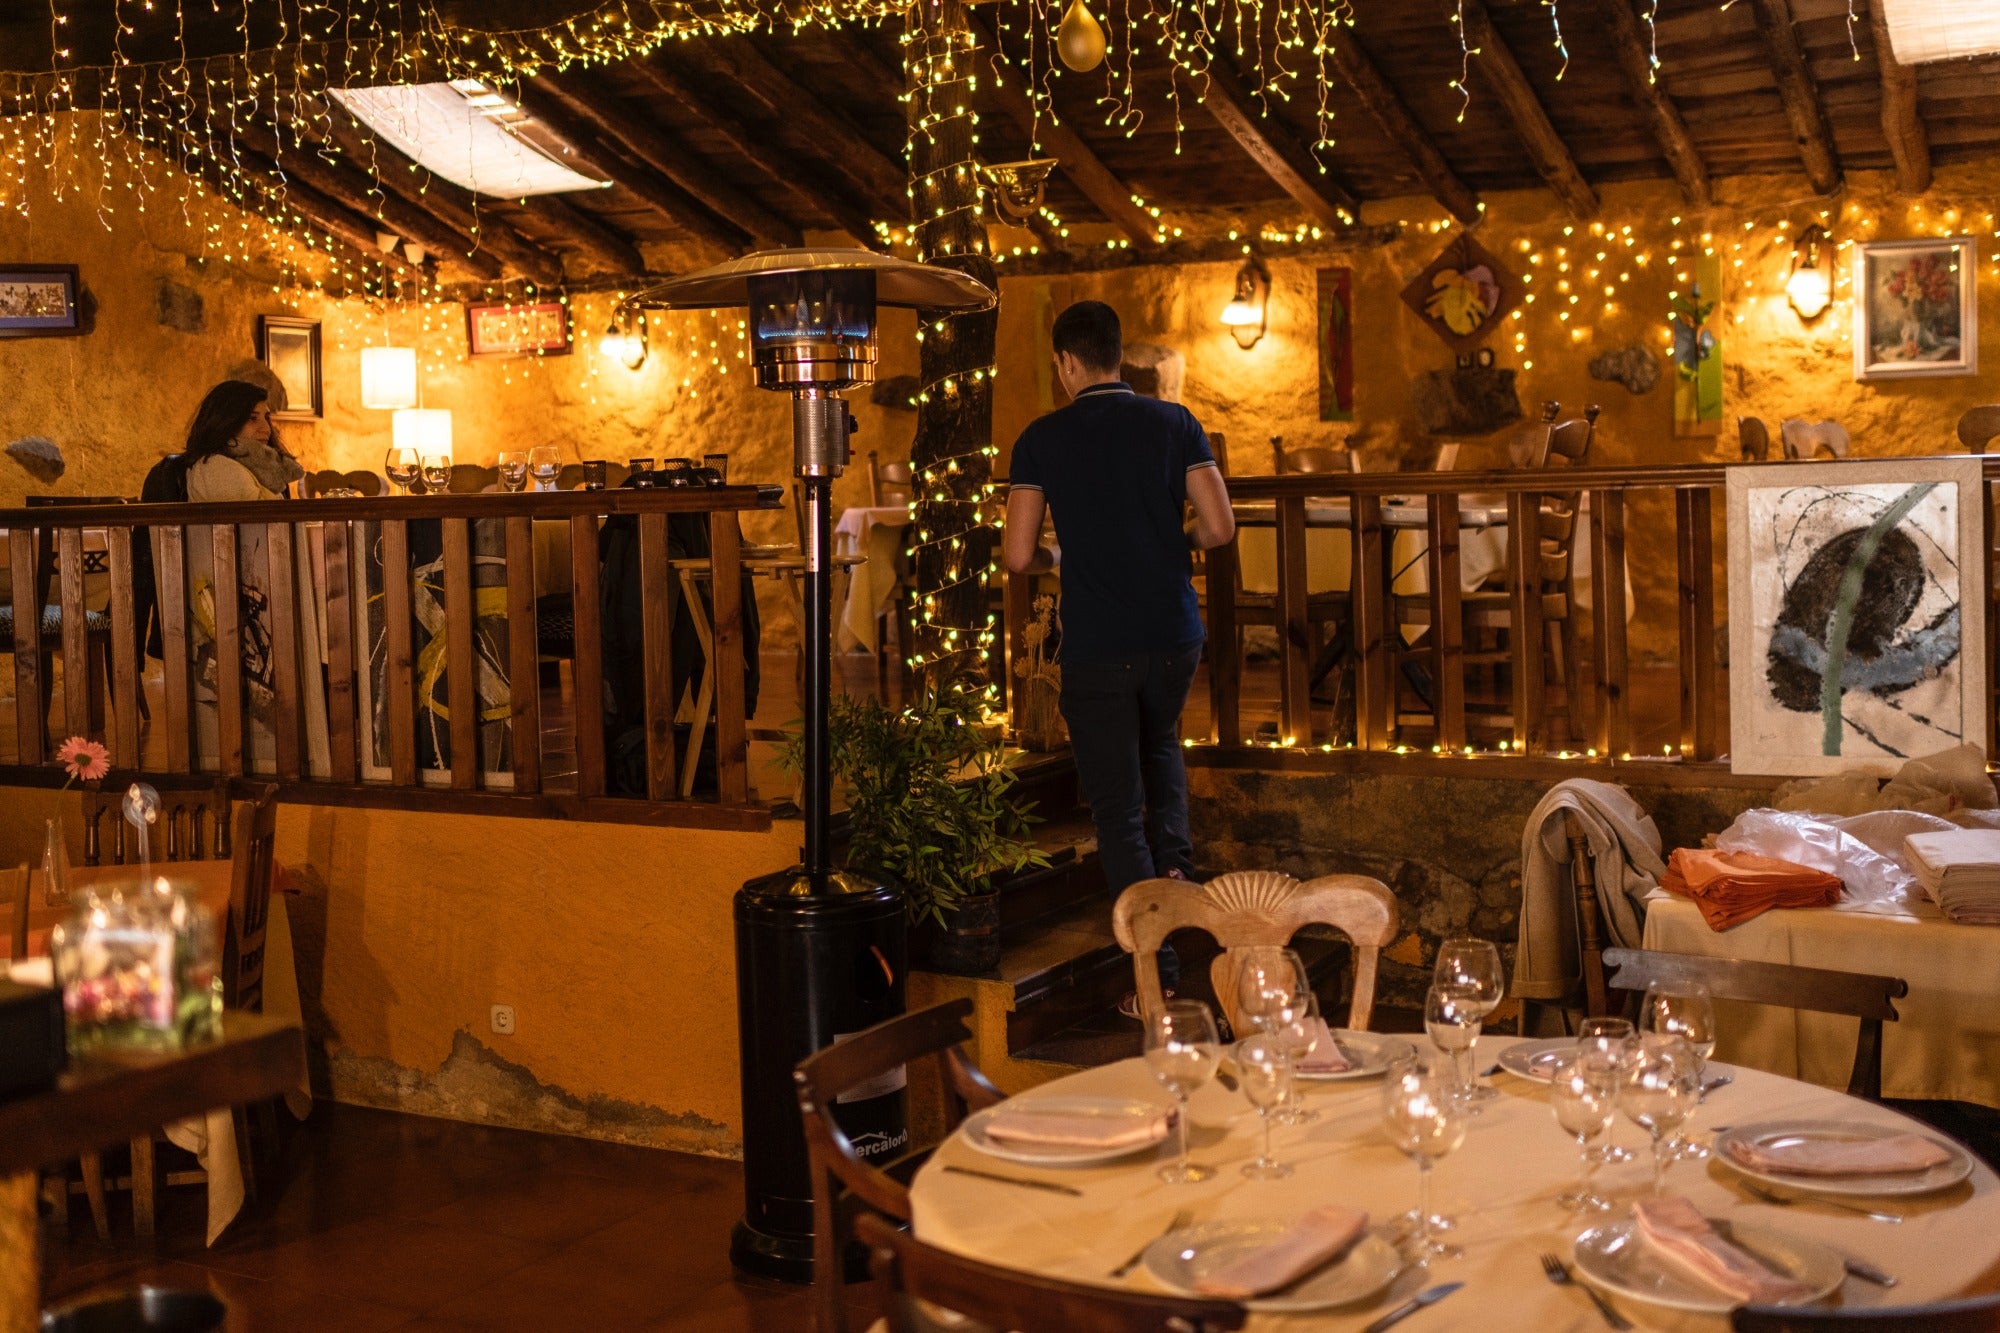 Restaurante el zaguan, becerril de la sierra